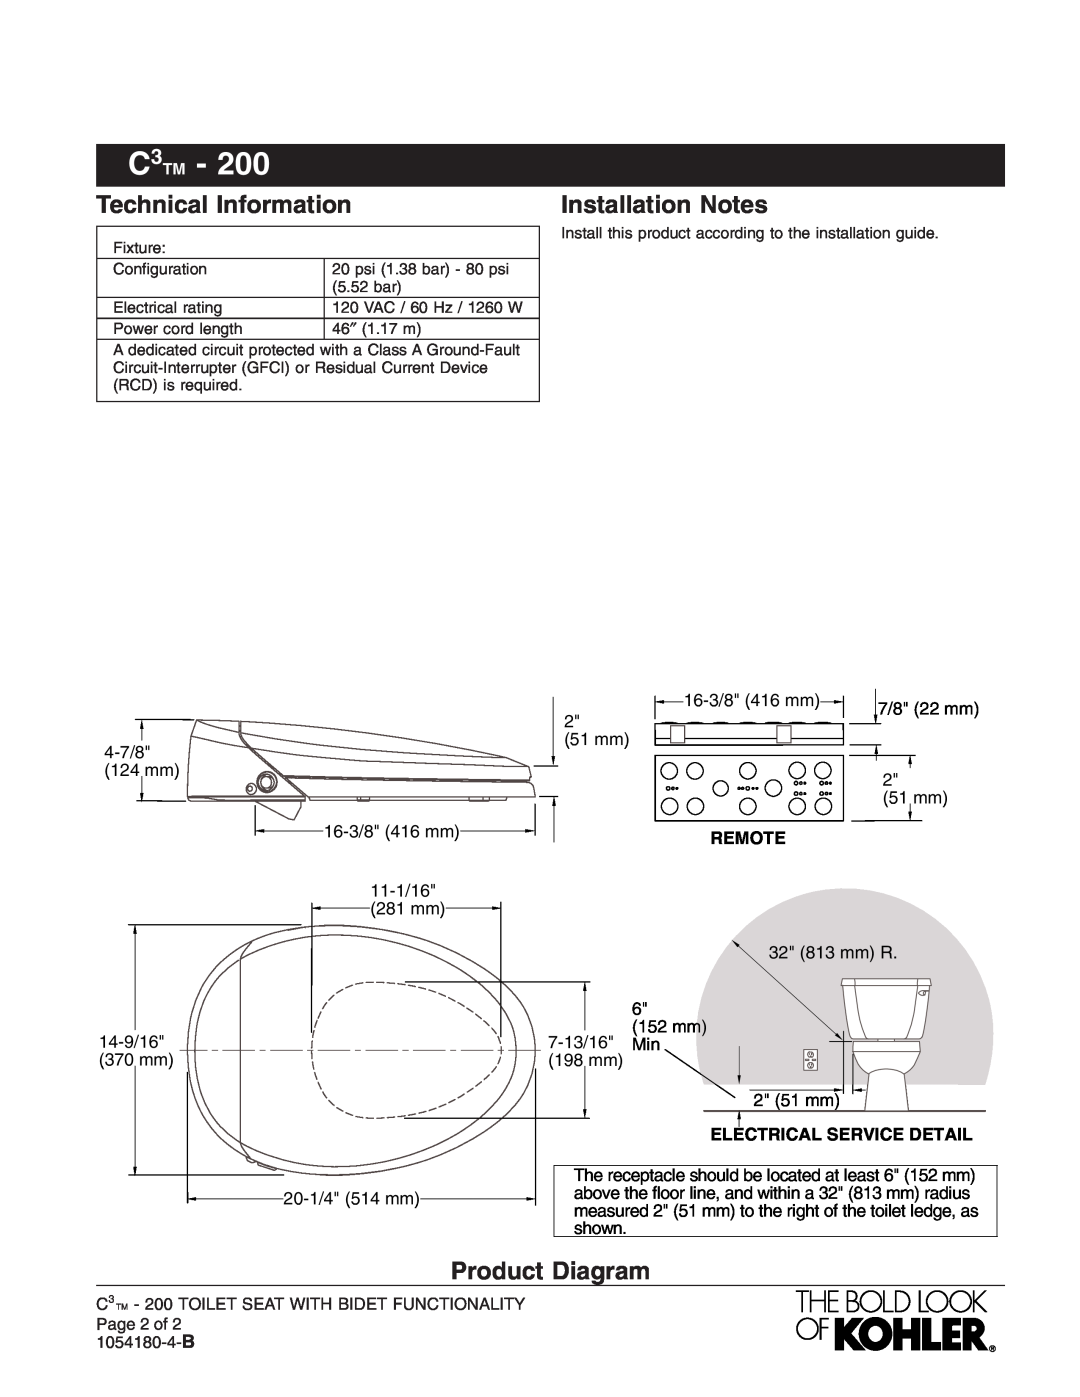 Kohler K-4709 manual Technical Information, Installation Notes, Product Diagram, C3TM, Remote, Electrical Service Detail 